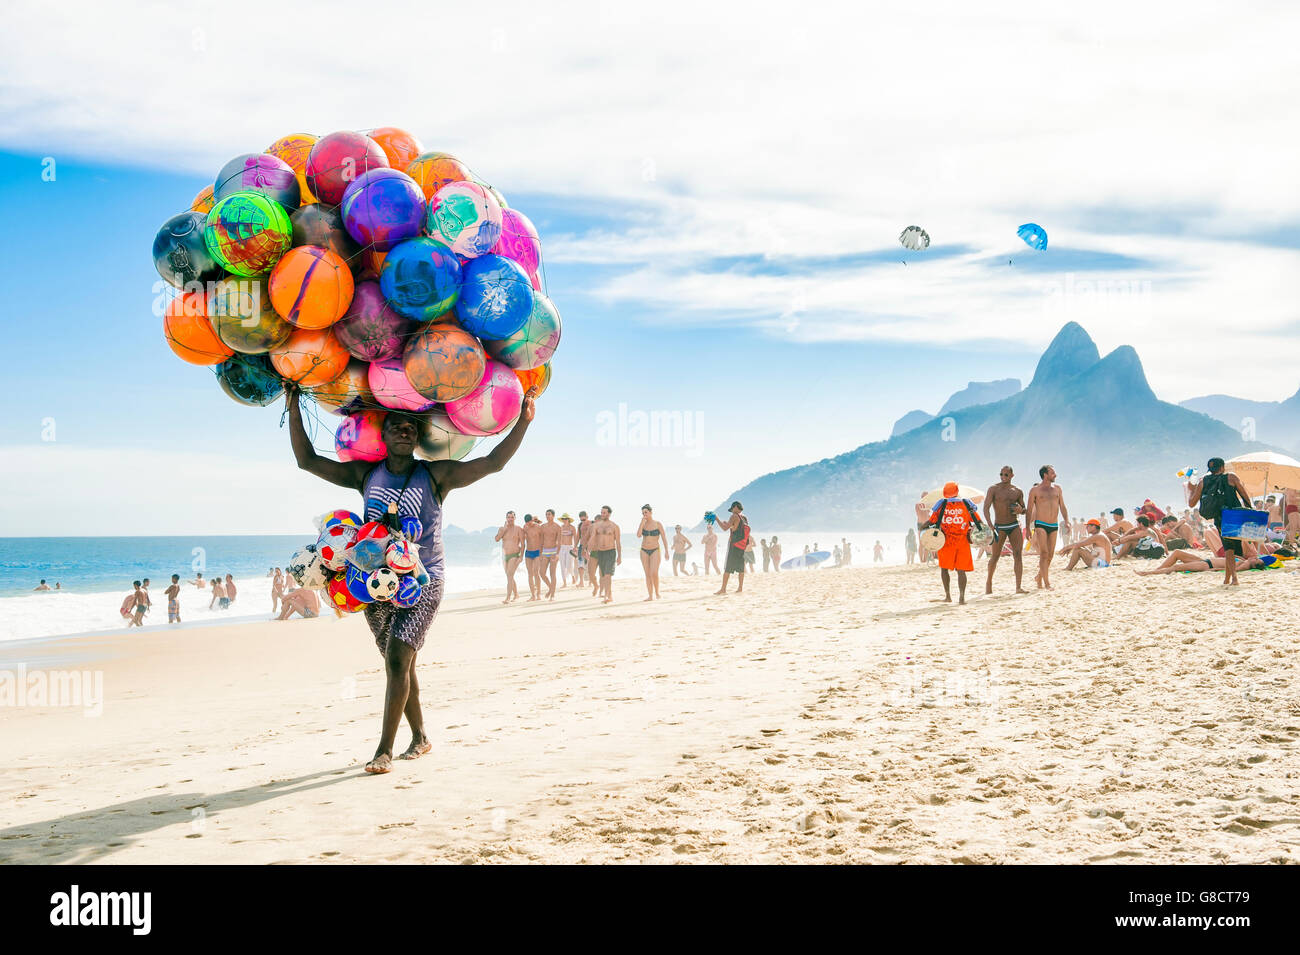 RIO DE JANEIRO - JANUARY 20, 2013: Beach vendor selling colorful beach balls carries his merchandise along Ipanema Beach. Stock Photo